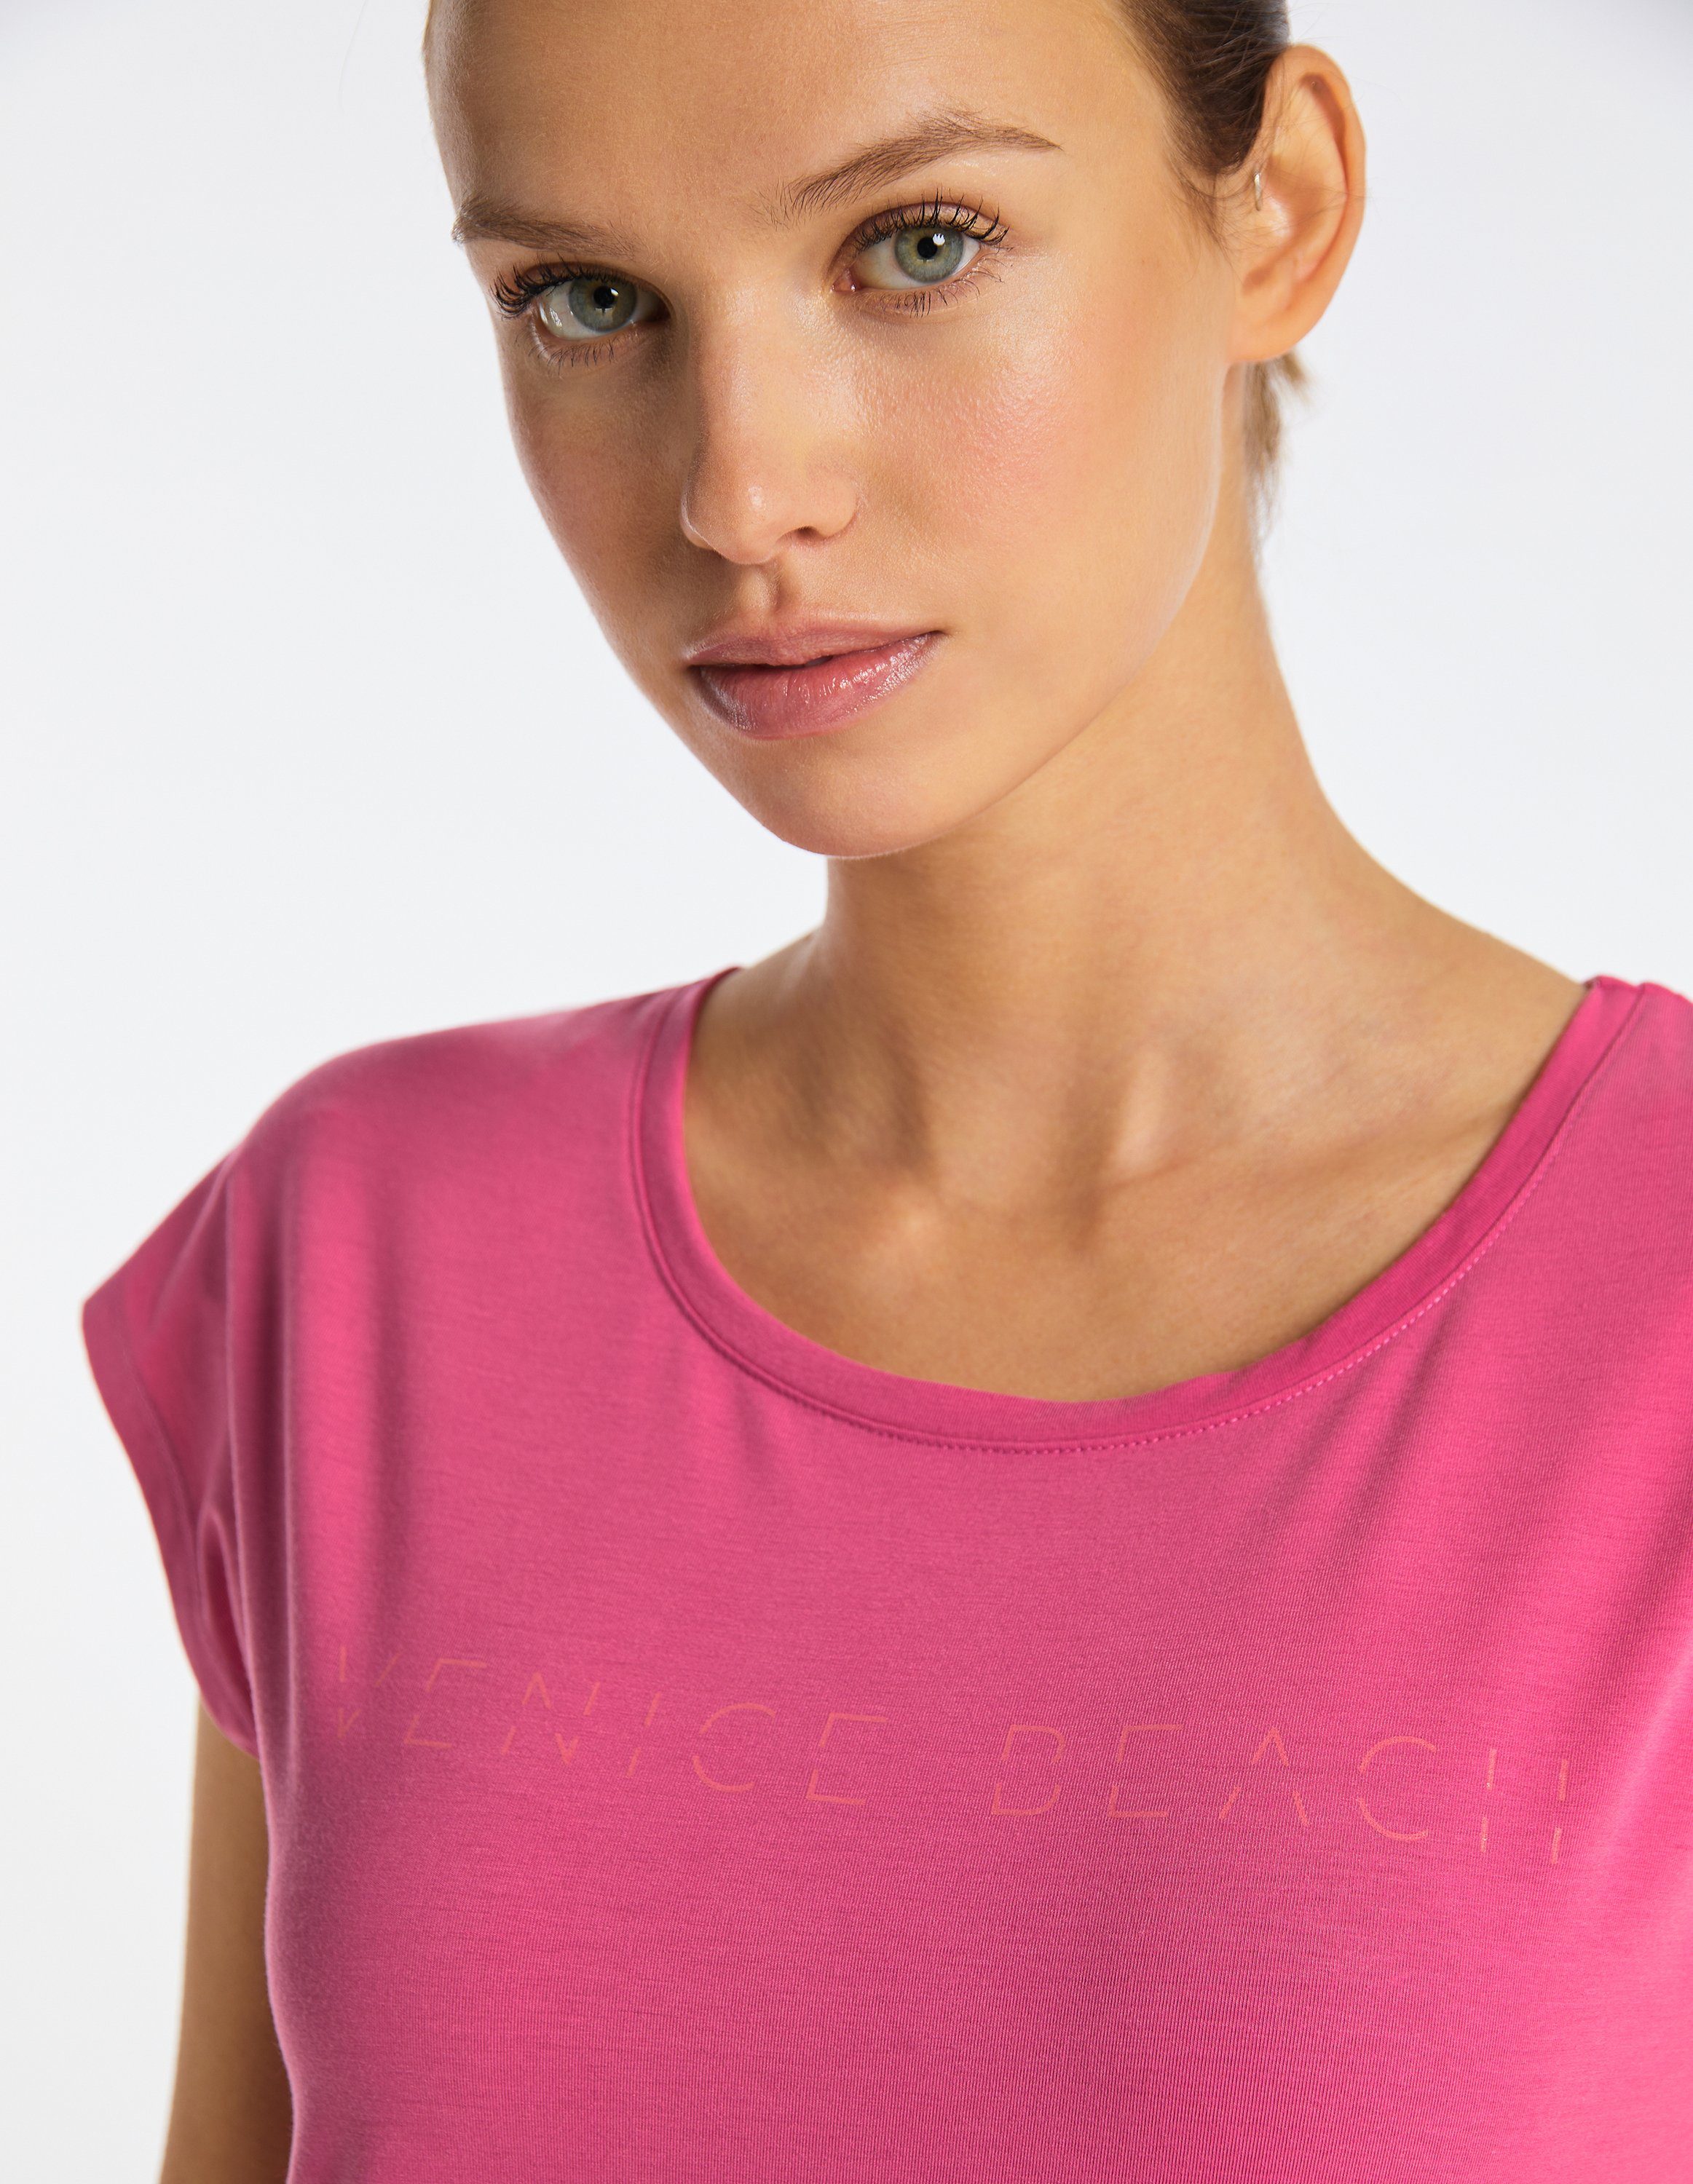 Beach T-Shirt pink sky T-Shirt WONDER Venice VB